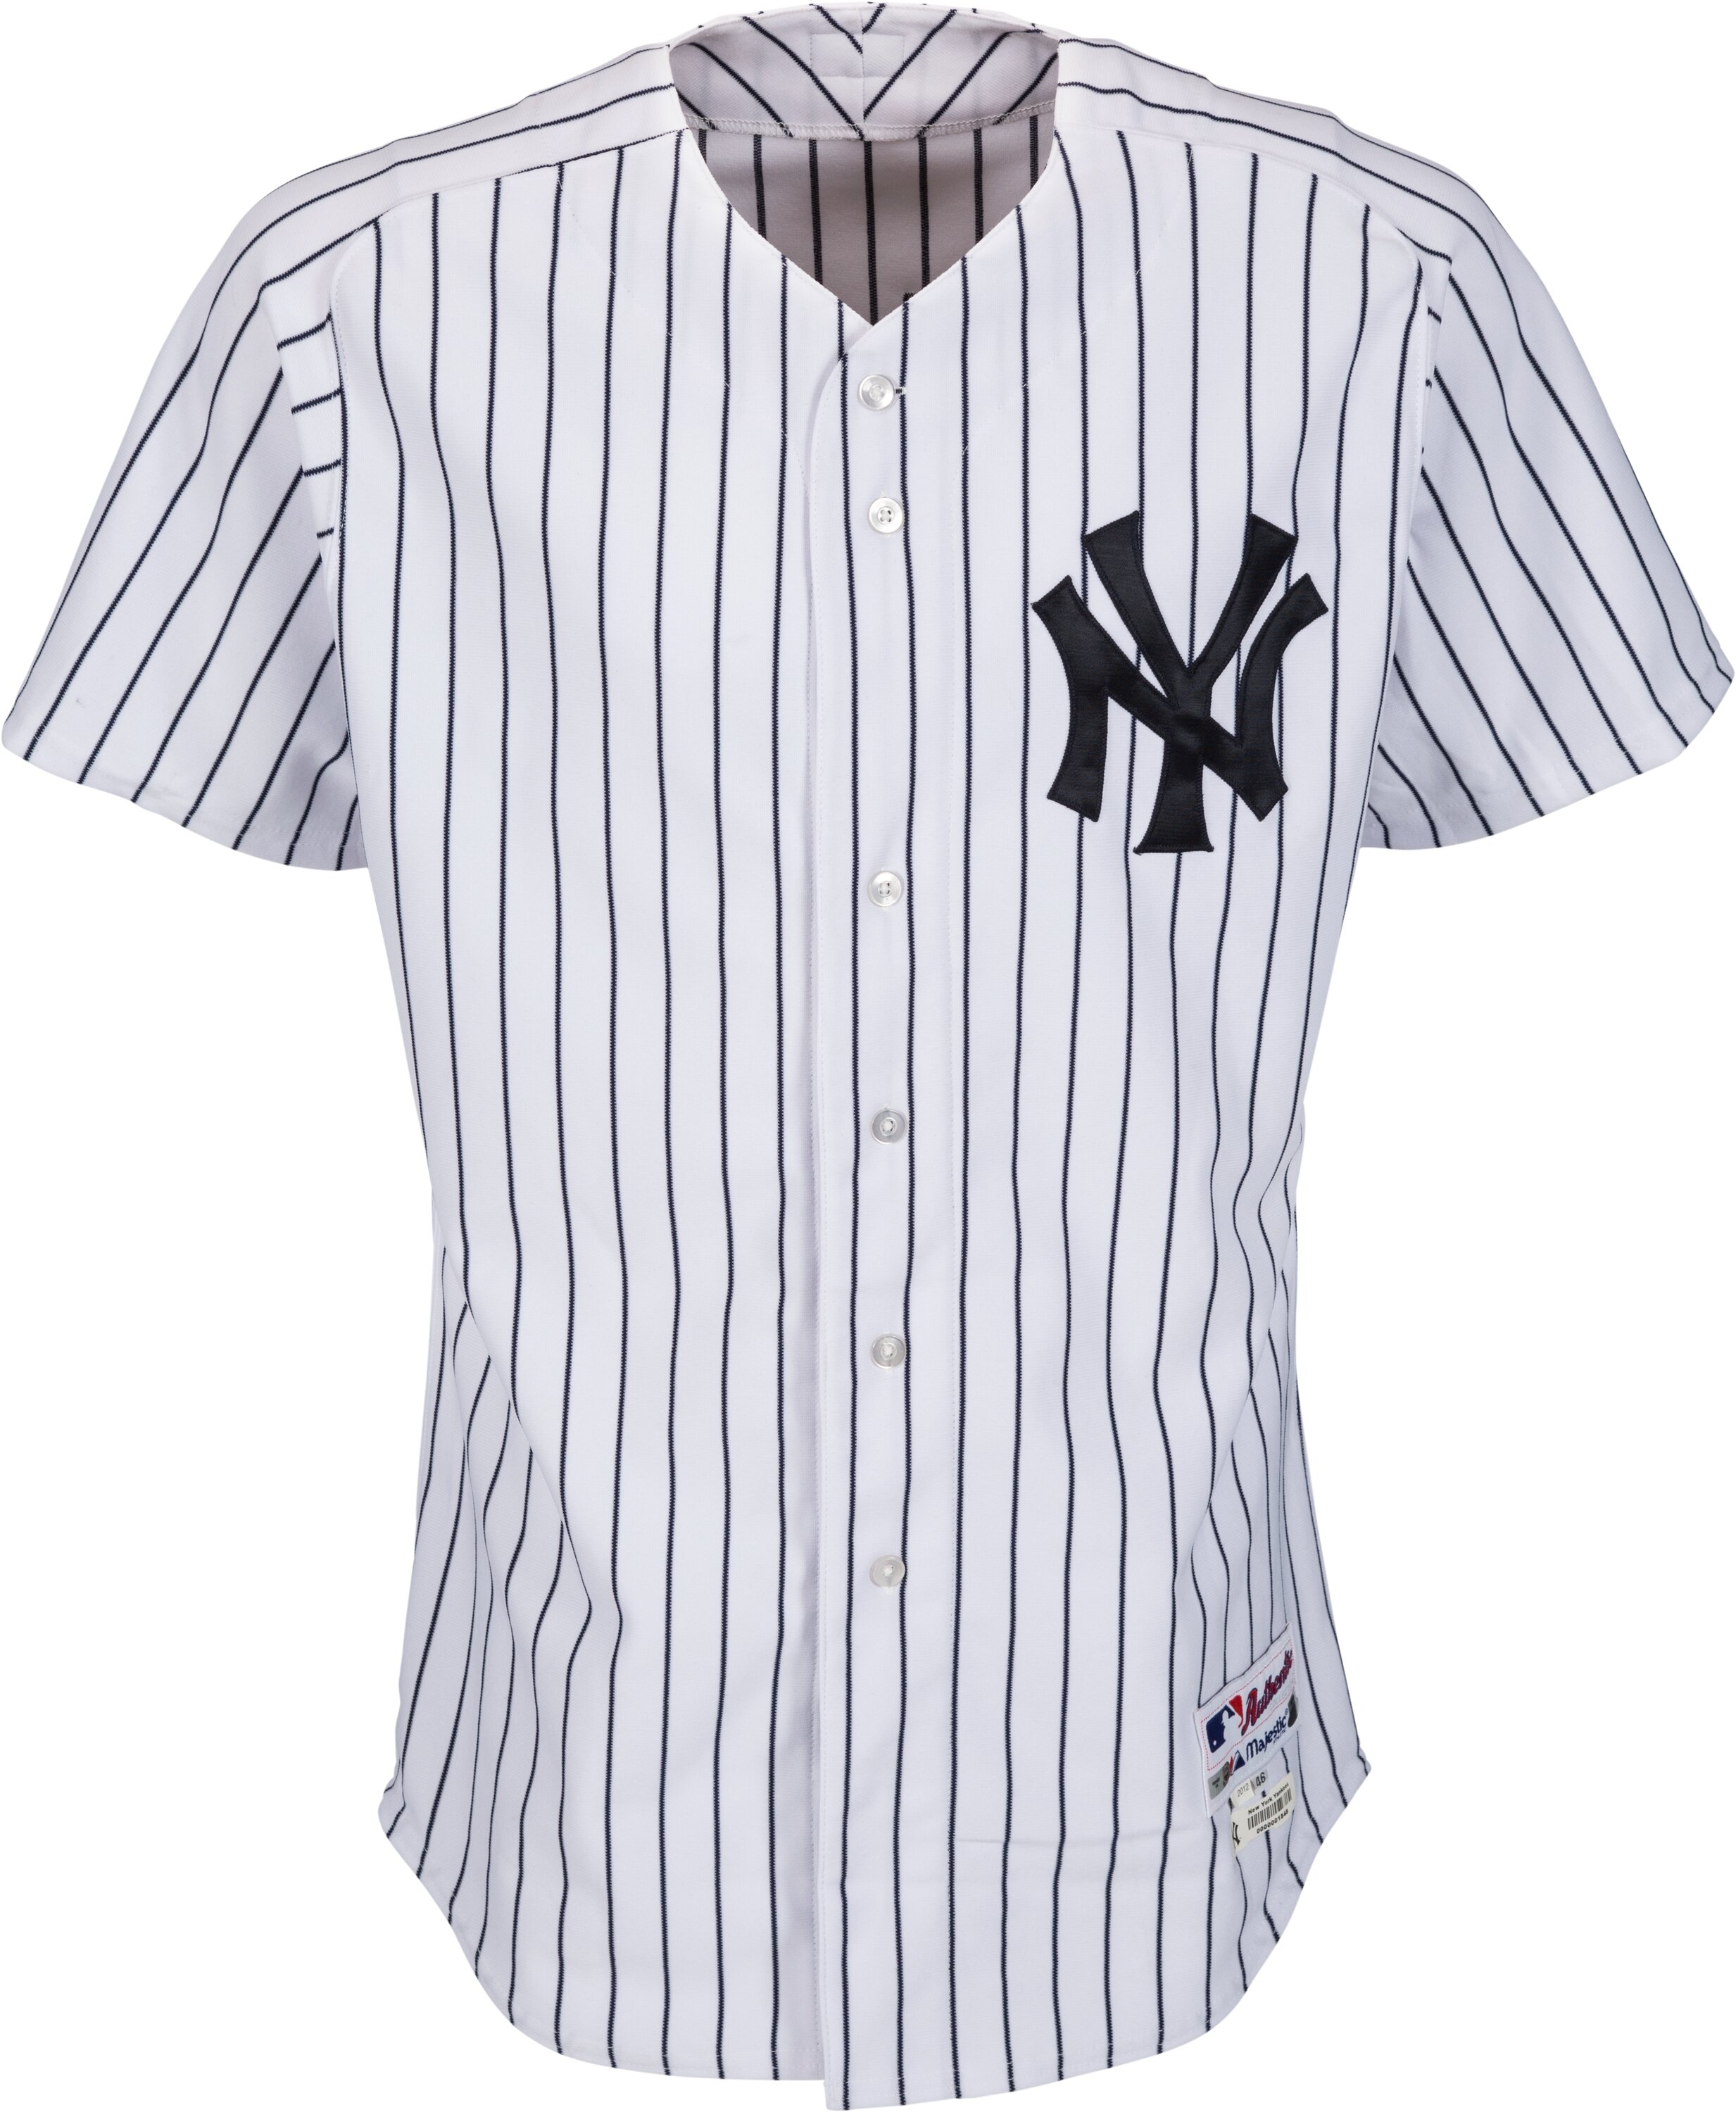 Mariano Rivera New York Yankees #42 Jersey Pin - MLB All-Time Save Leader